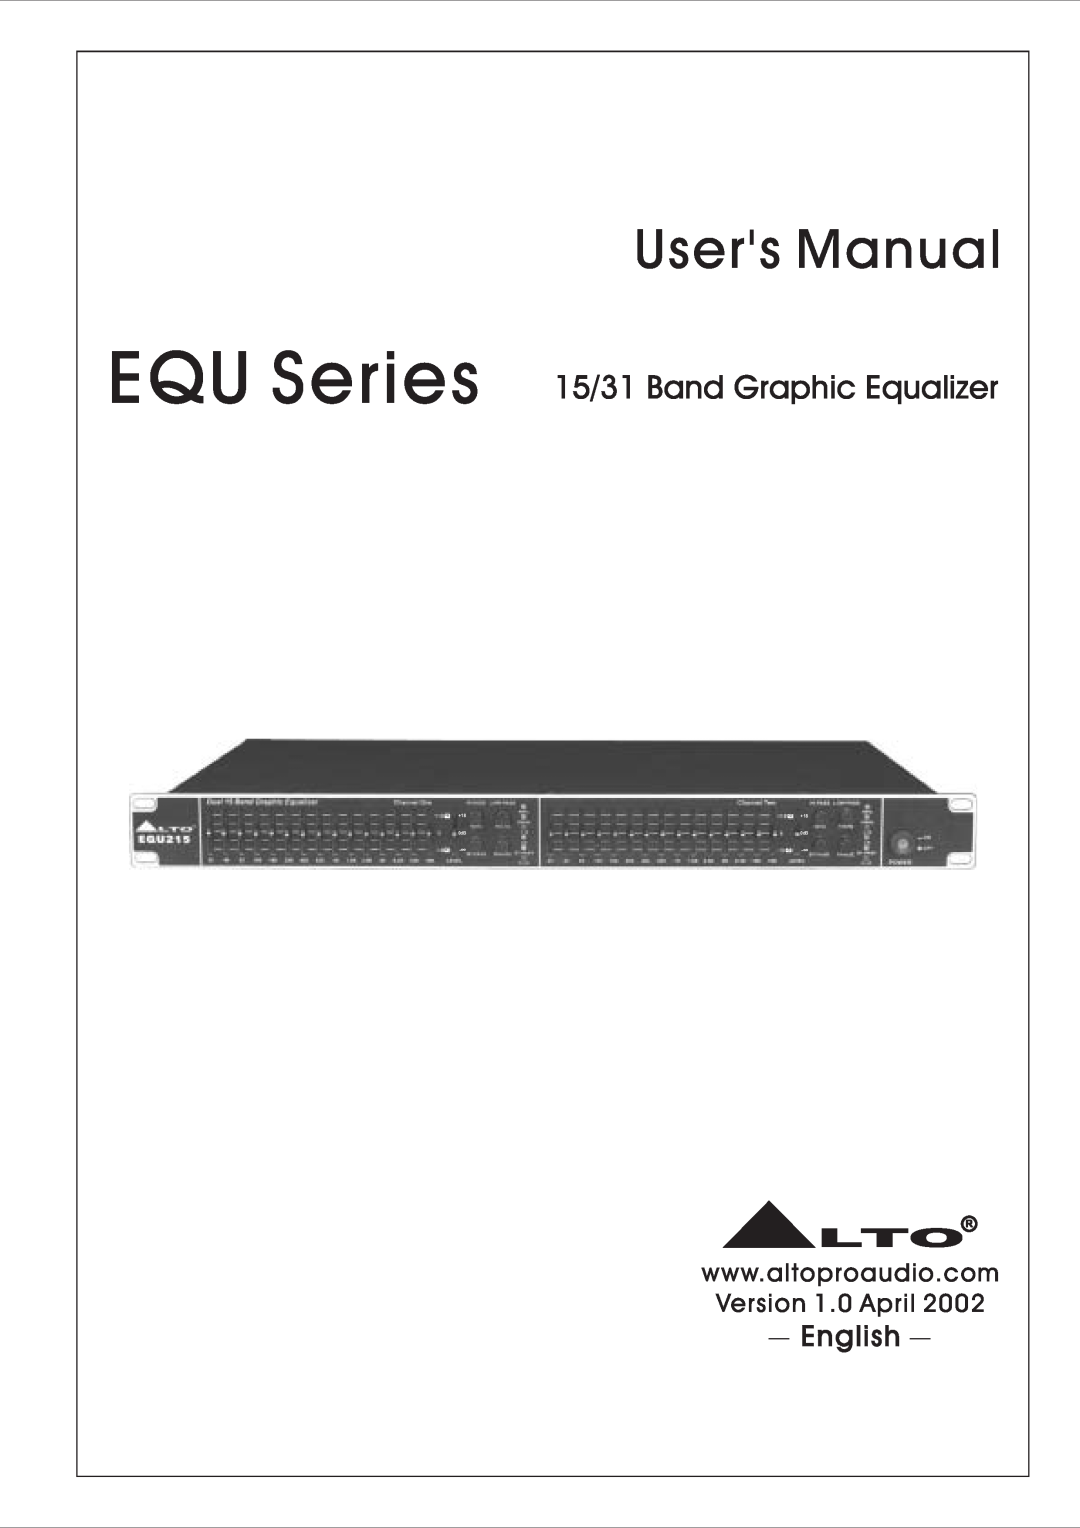 Nilfisk-ALTO user manual EQU Series 15/31 Band Graphic Equalizer, English 